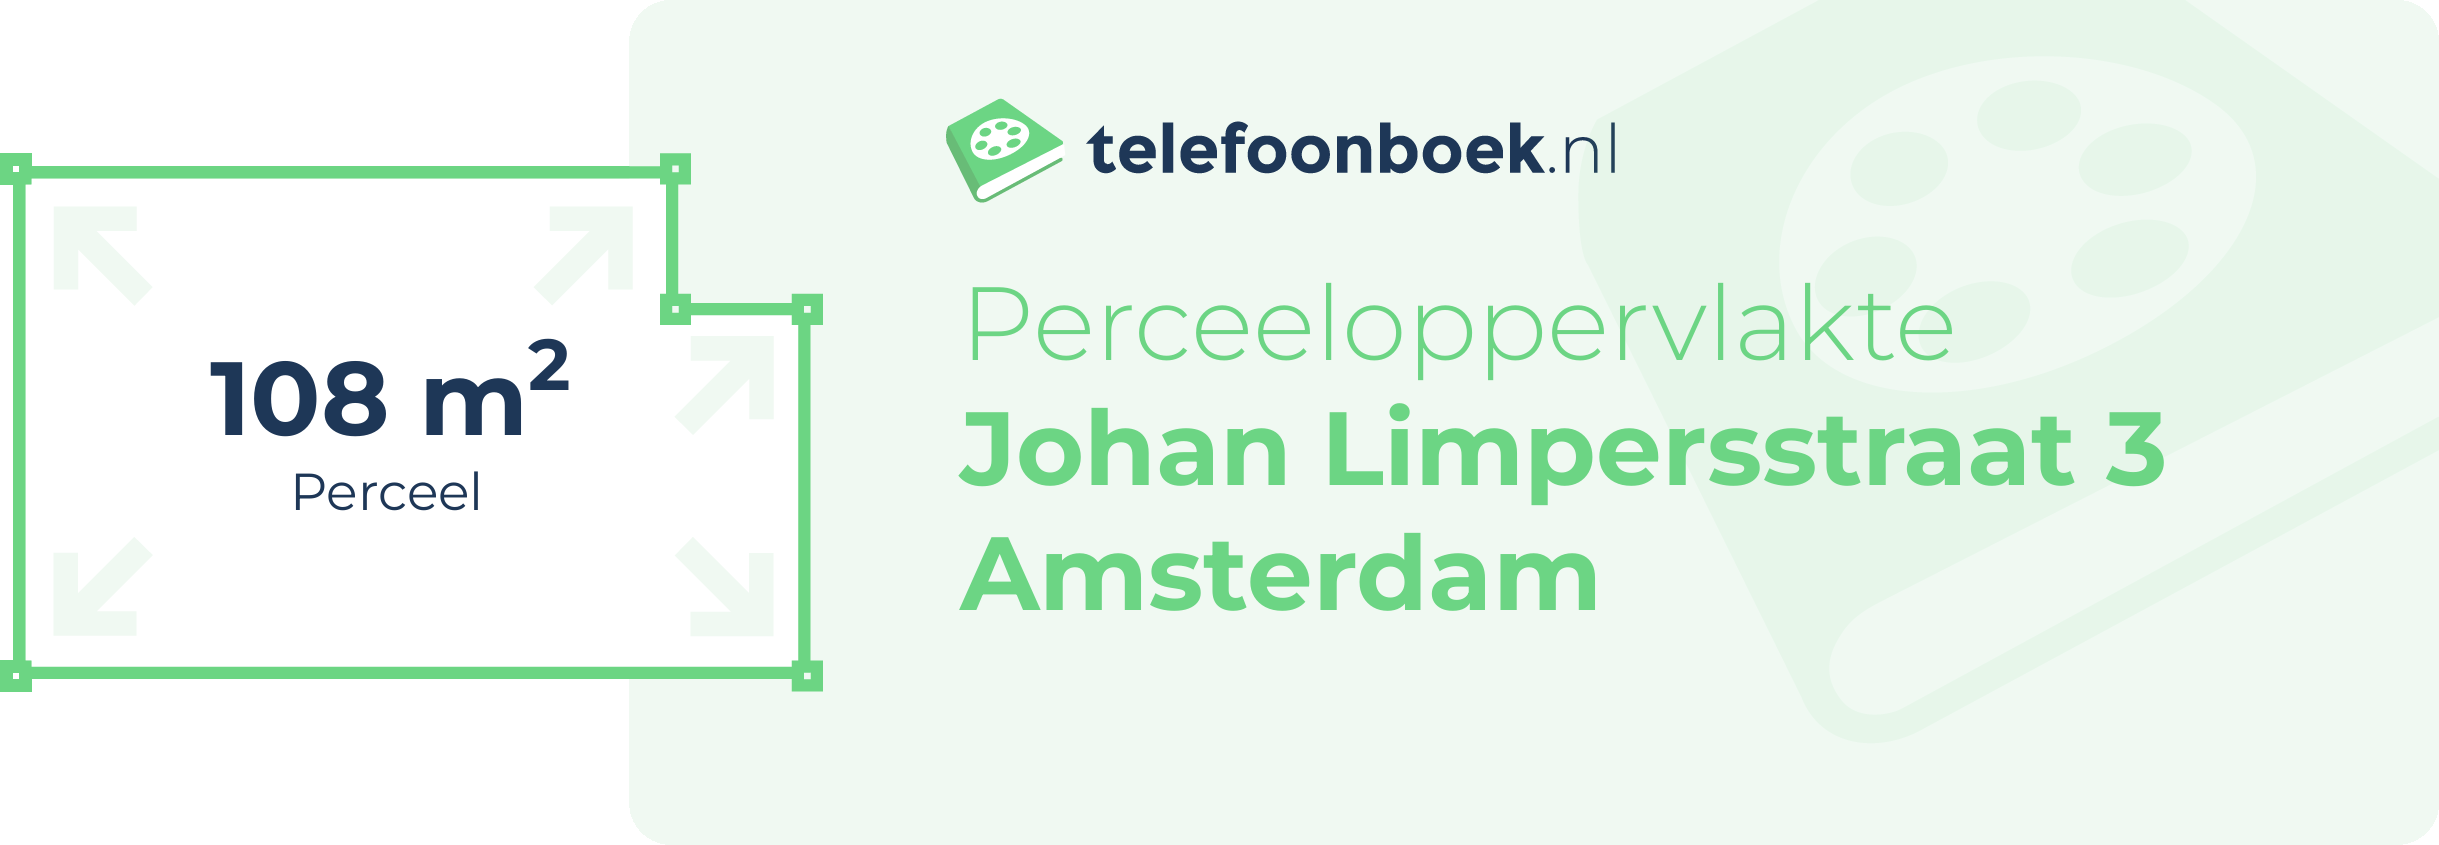 Perceeloppervlakte Johan Limpersstraat 3 Amsterdam